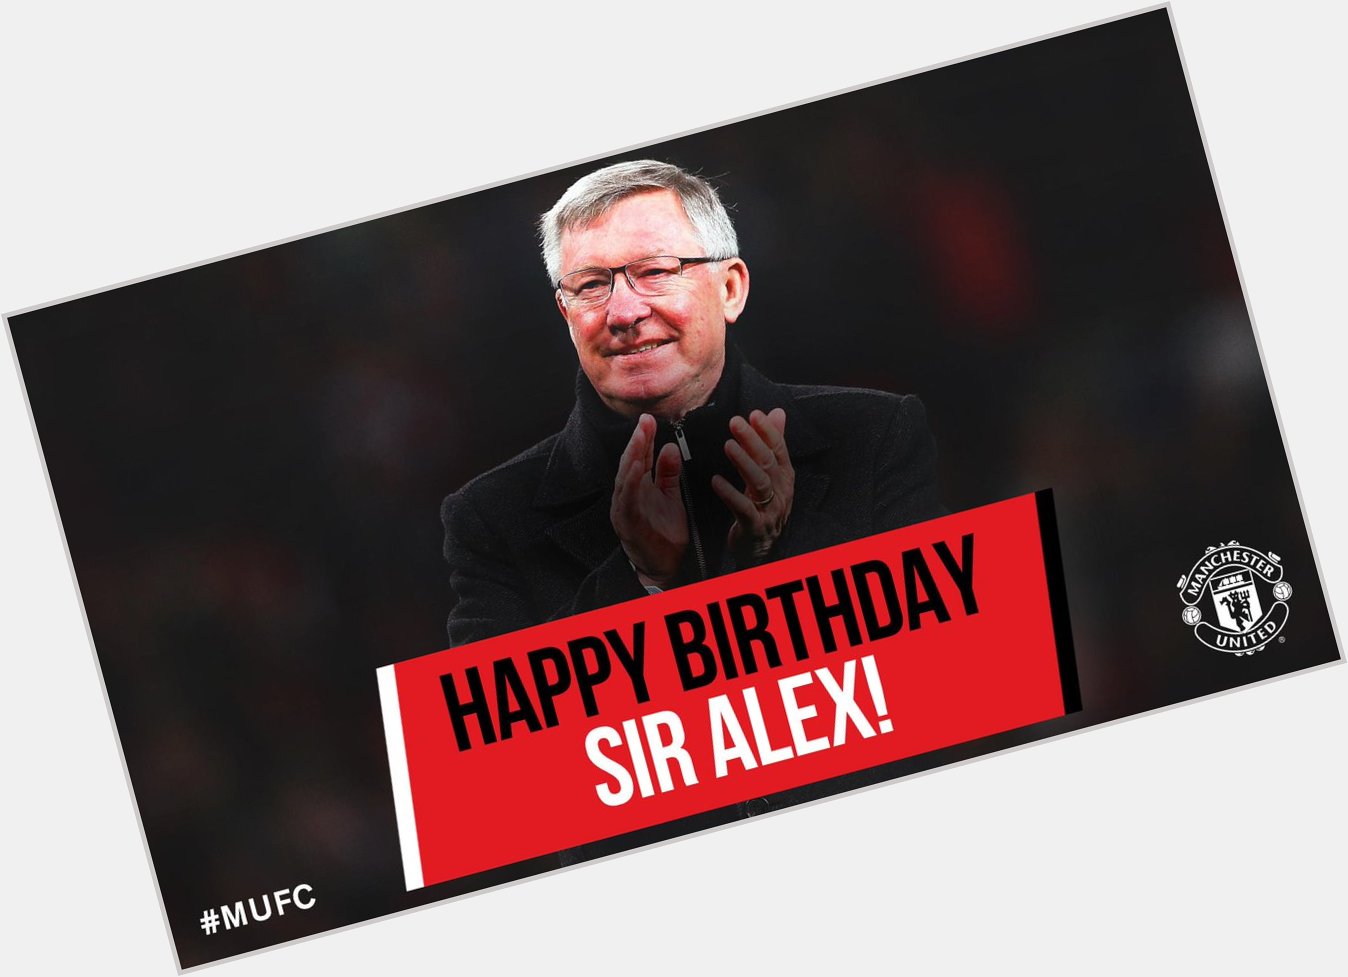 Join us in wishing legend Sir Alex Ferguson a very happy birthday! 